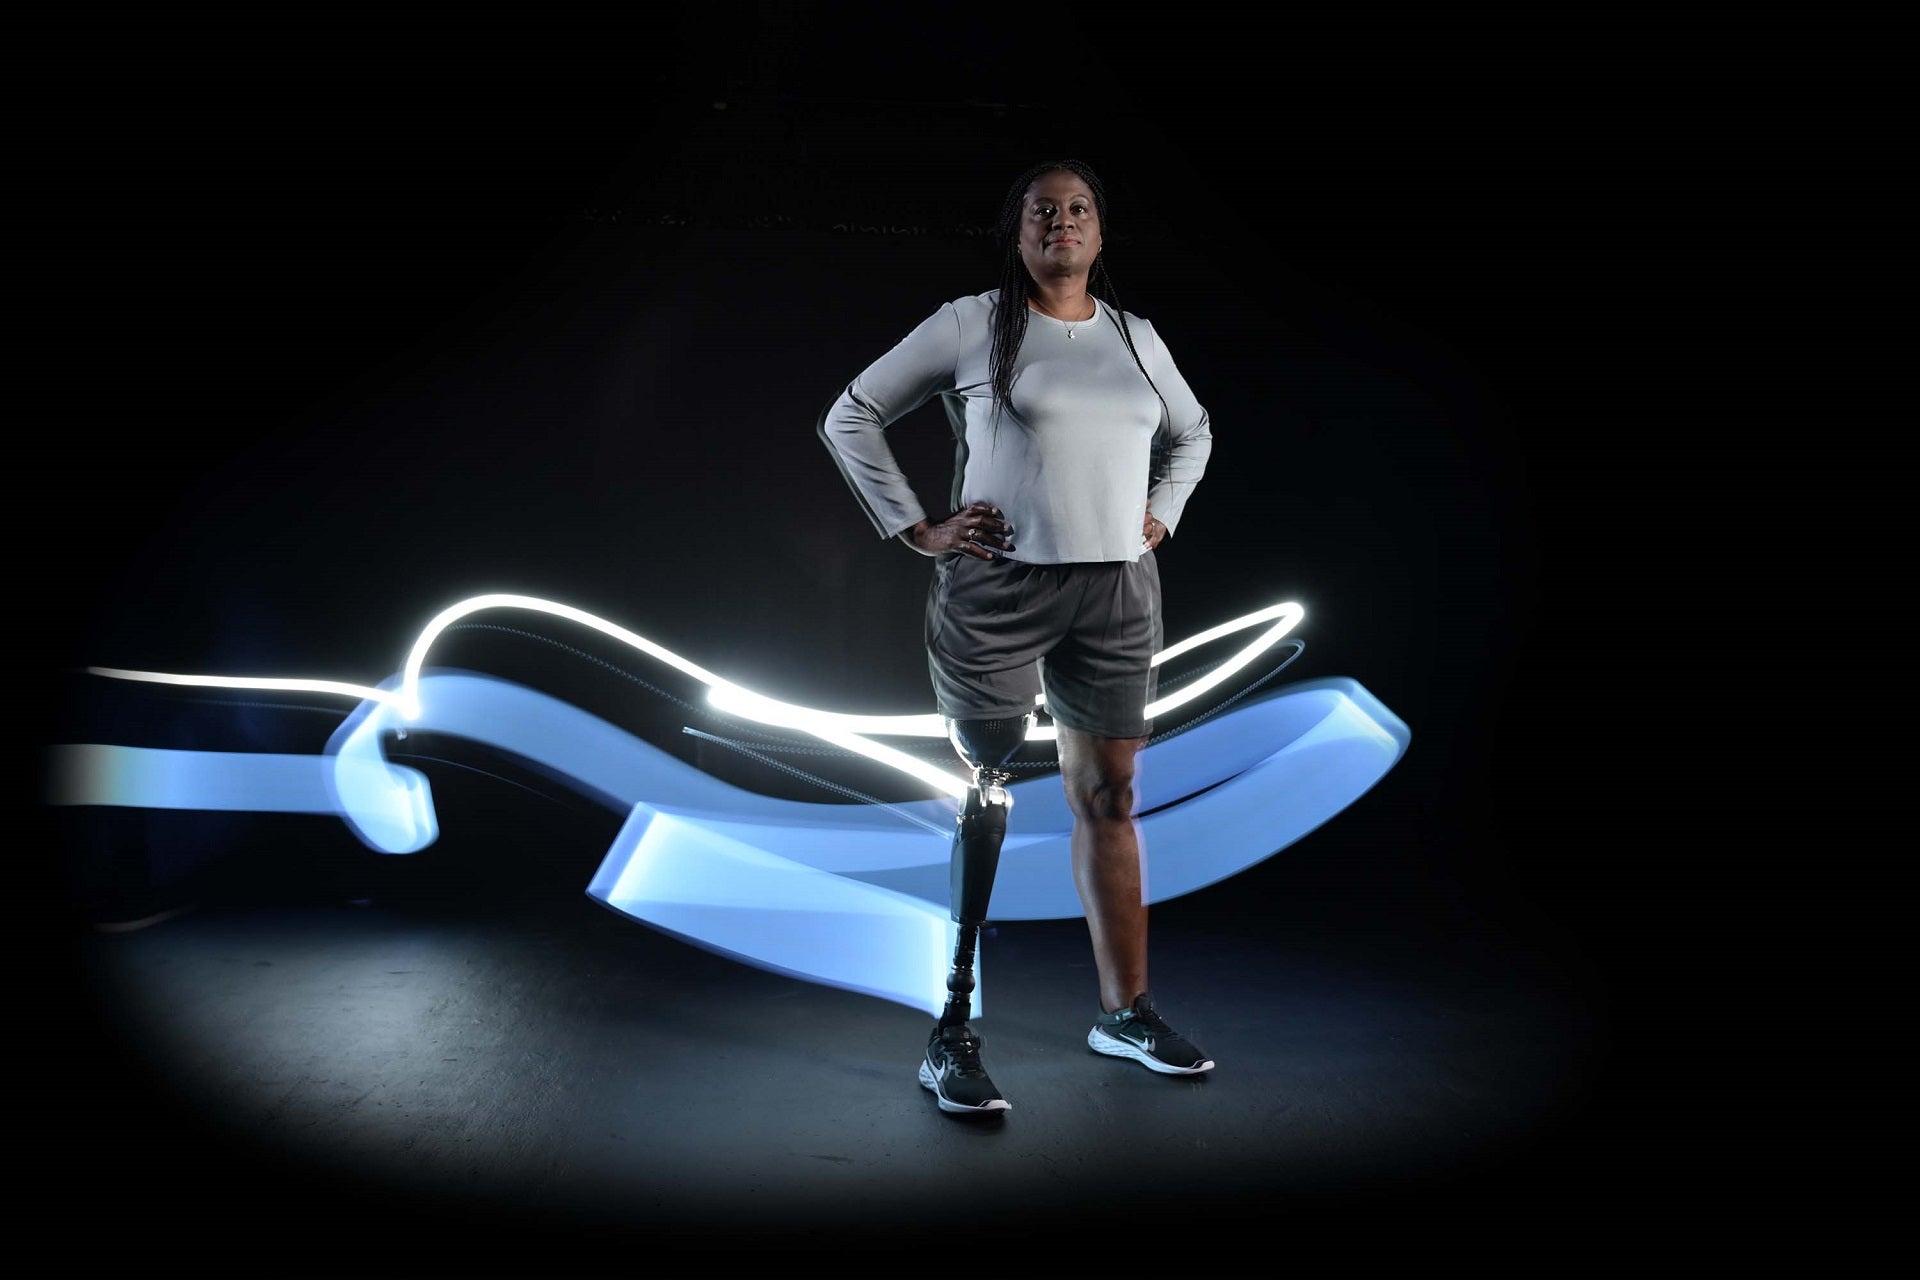 Össur introduces new motor-powered prosthetic knee